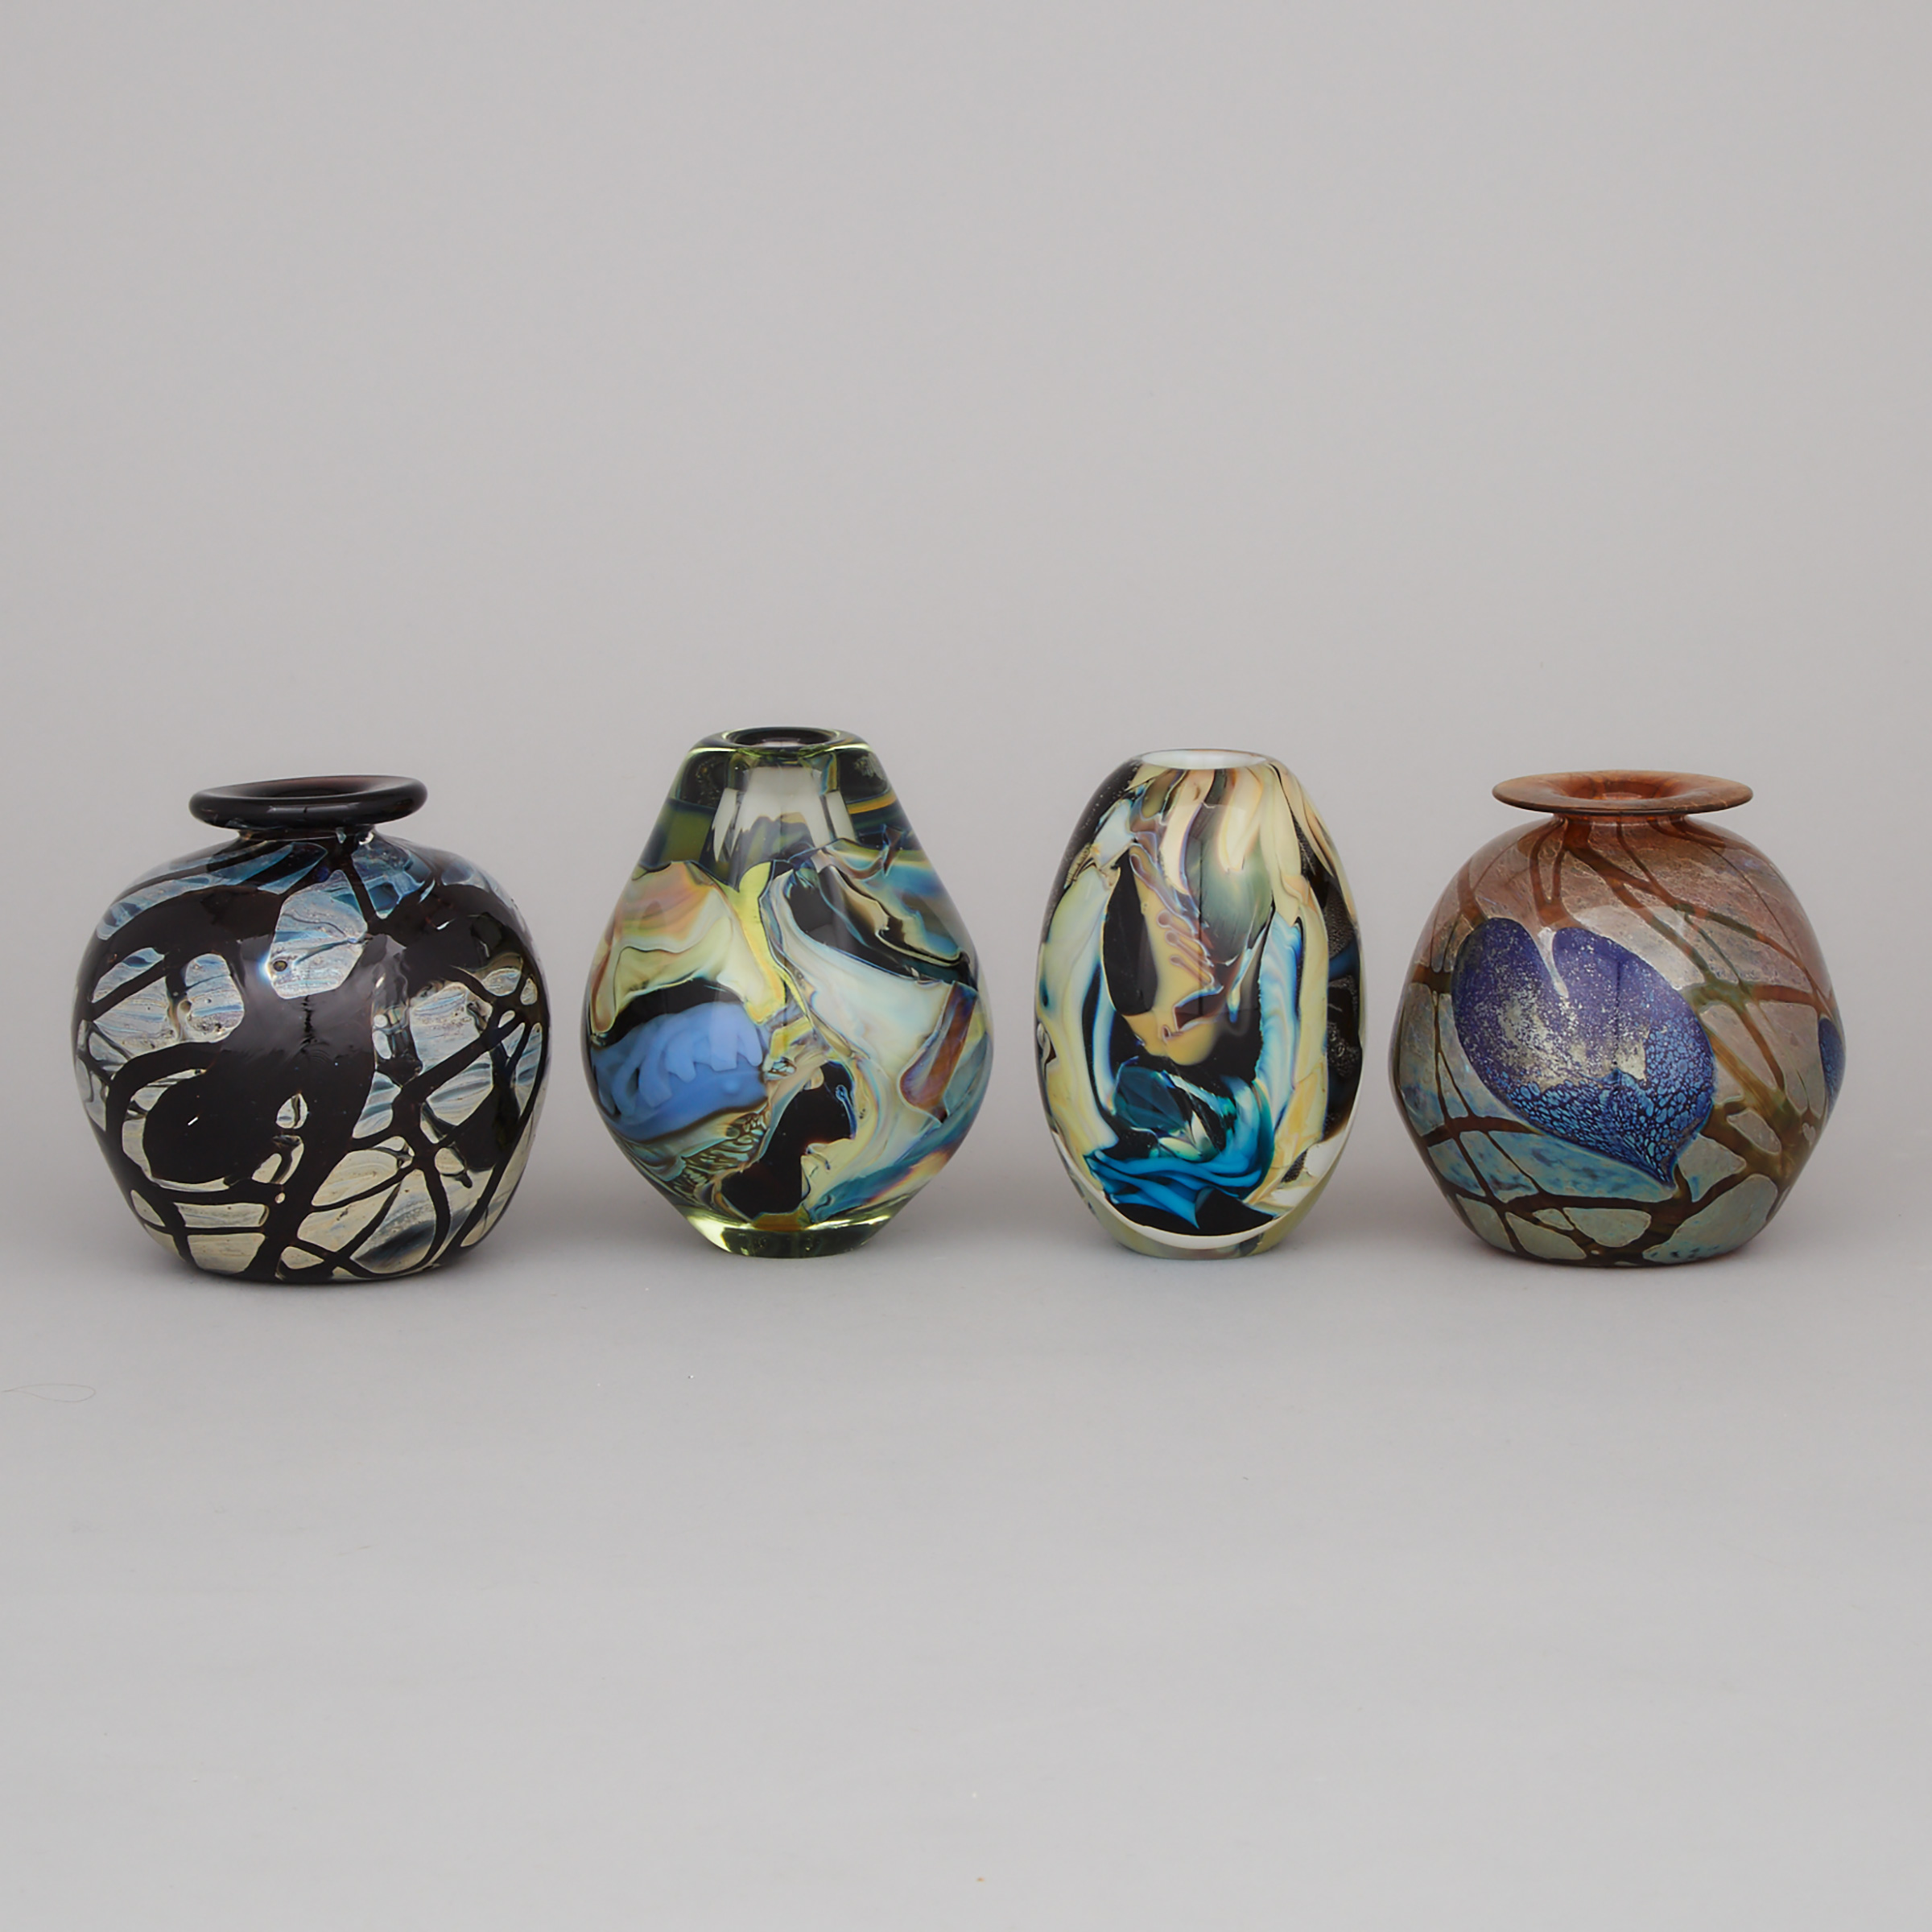 Four Studio Glass Vases, Mark Russel (2), Jon Sawyer, and Ed Roman, 1973-80